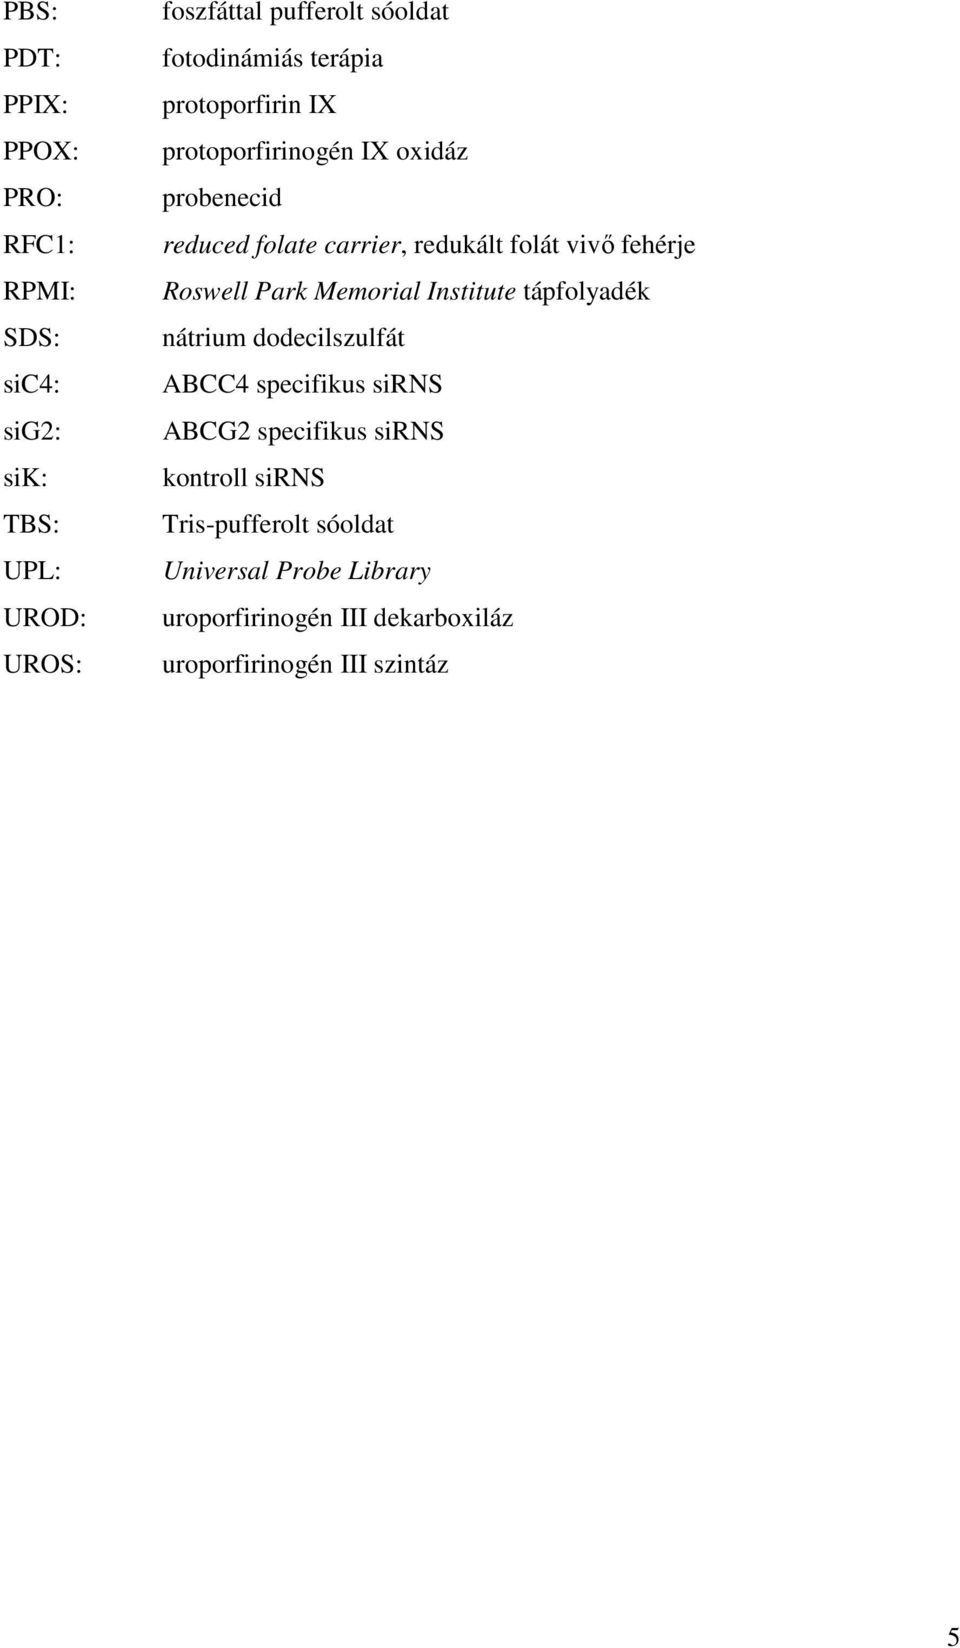 vivő fehérje Roswell Park Memorial Institute tápfolyadék nátrium dodecilszulfát ABCC4 specifikus sirns ABCG2 specifikus